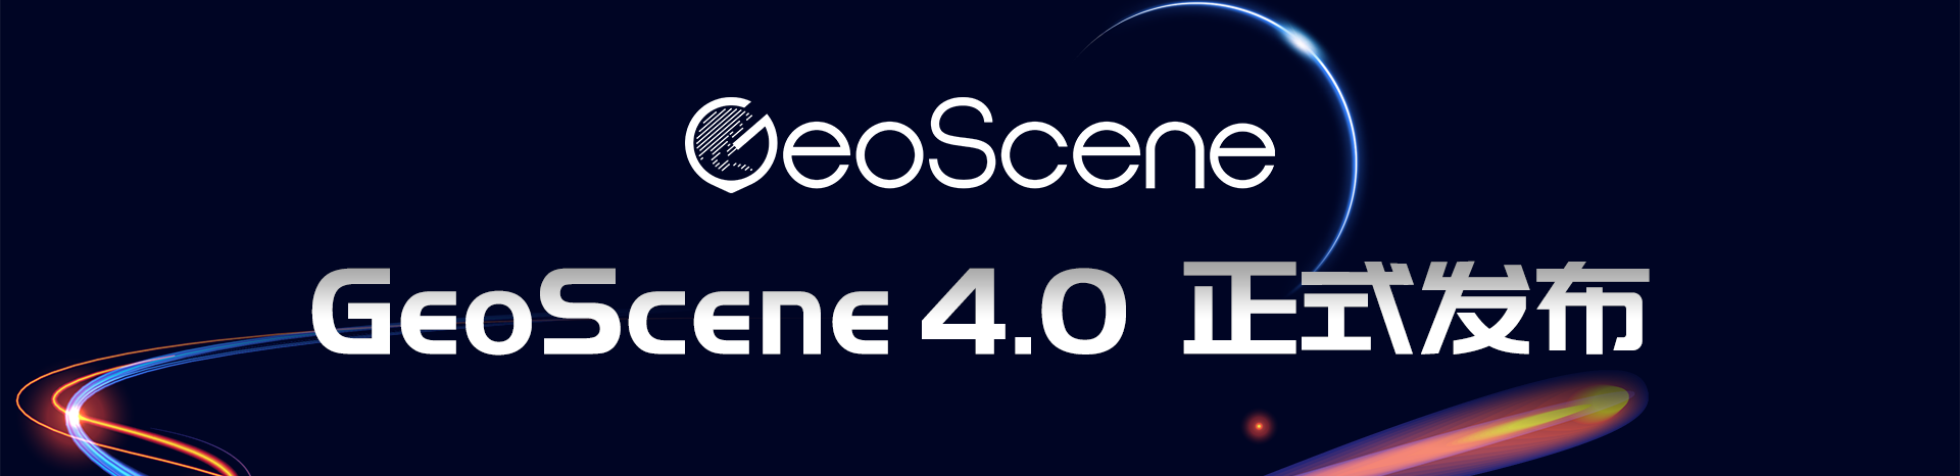 Geoscene4.0